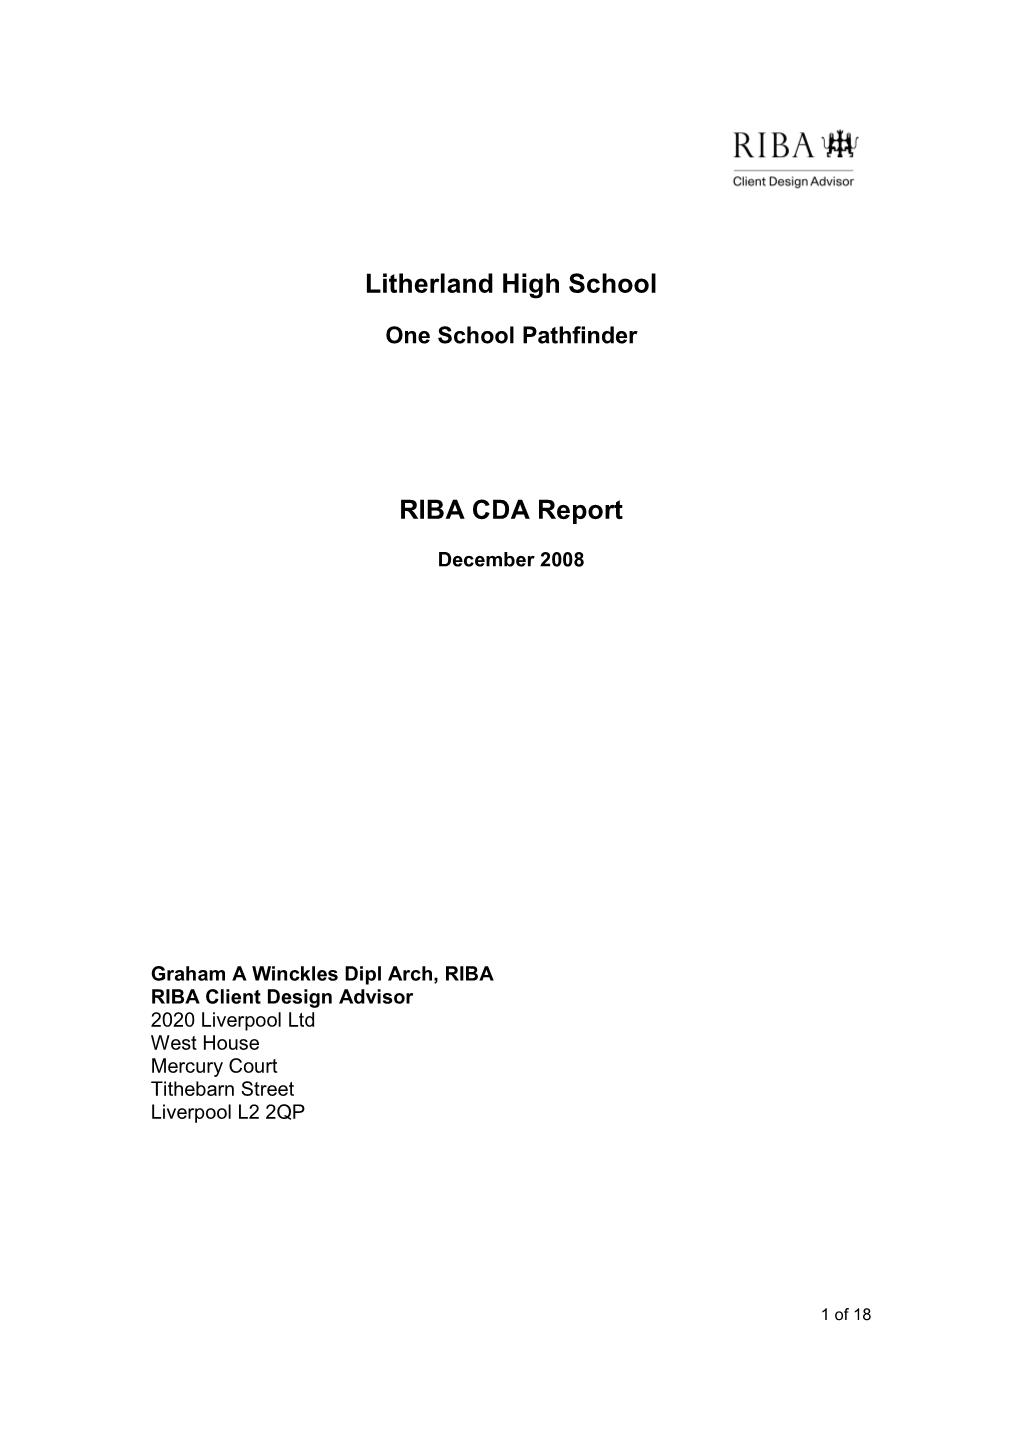 Litherland High School RIBA CDA Report